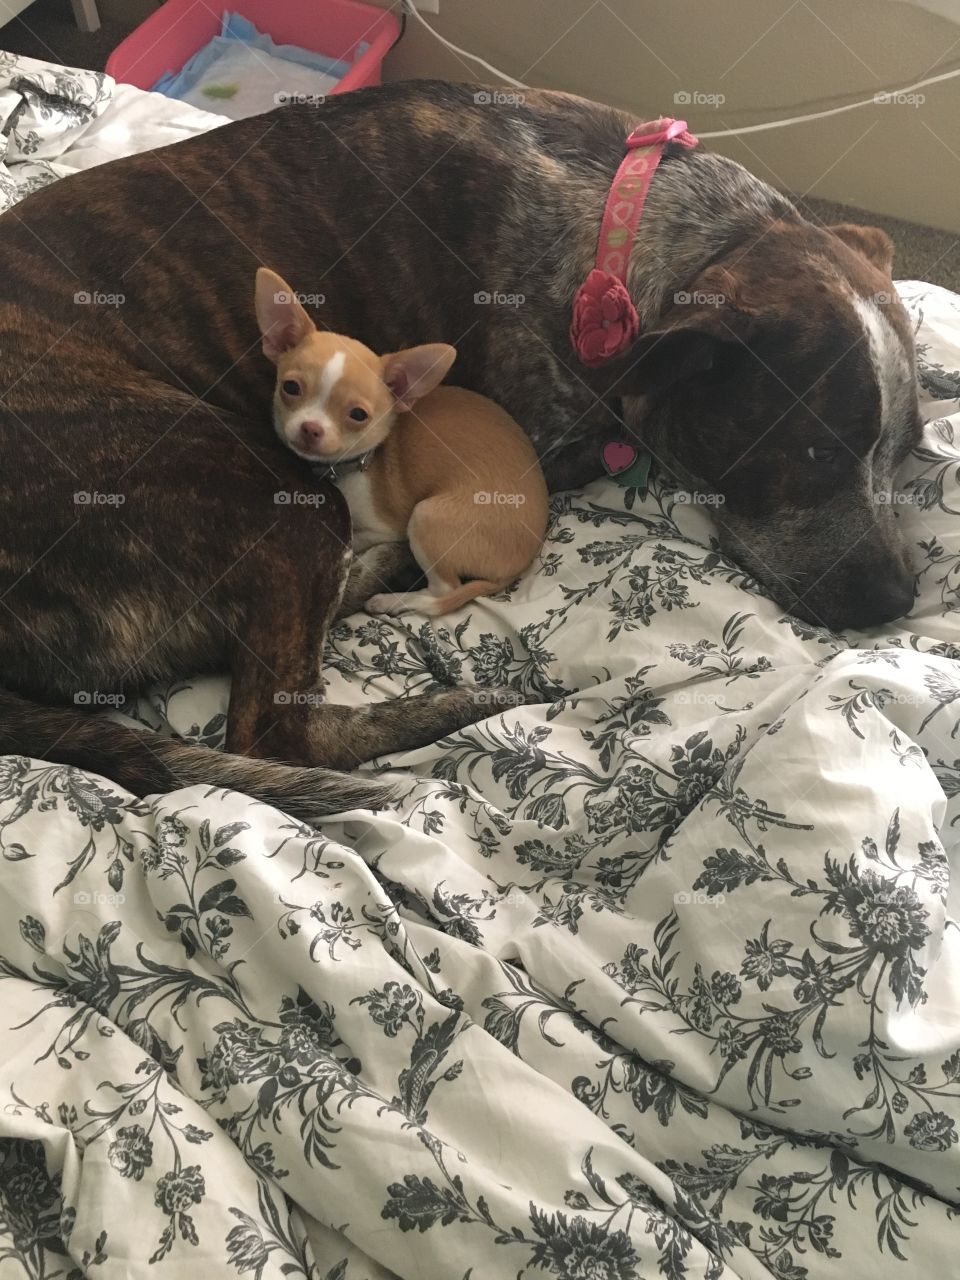 Cuddle bug puppies